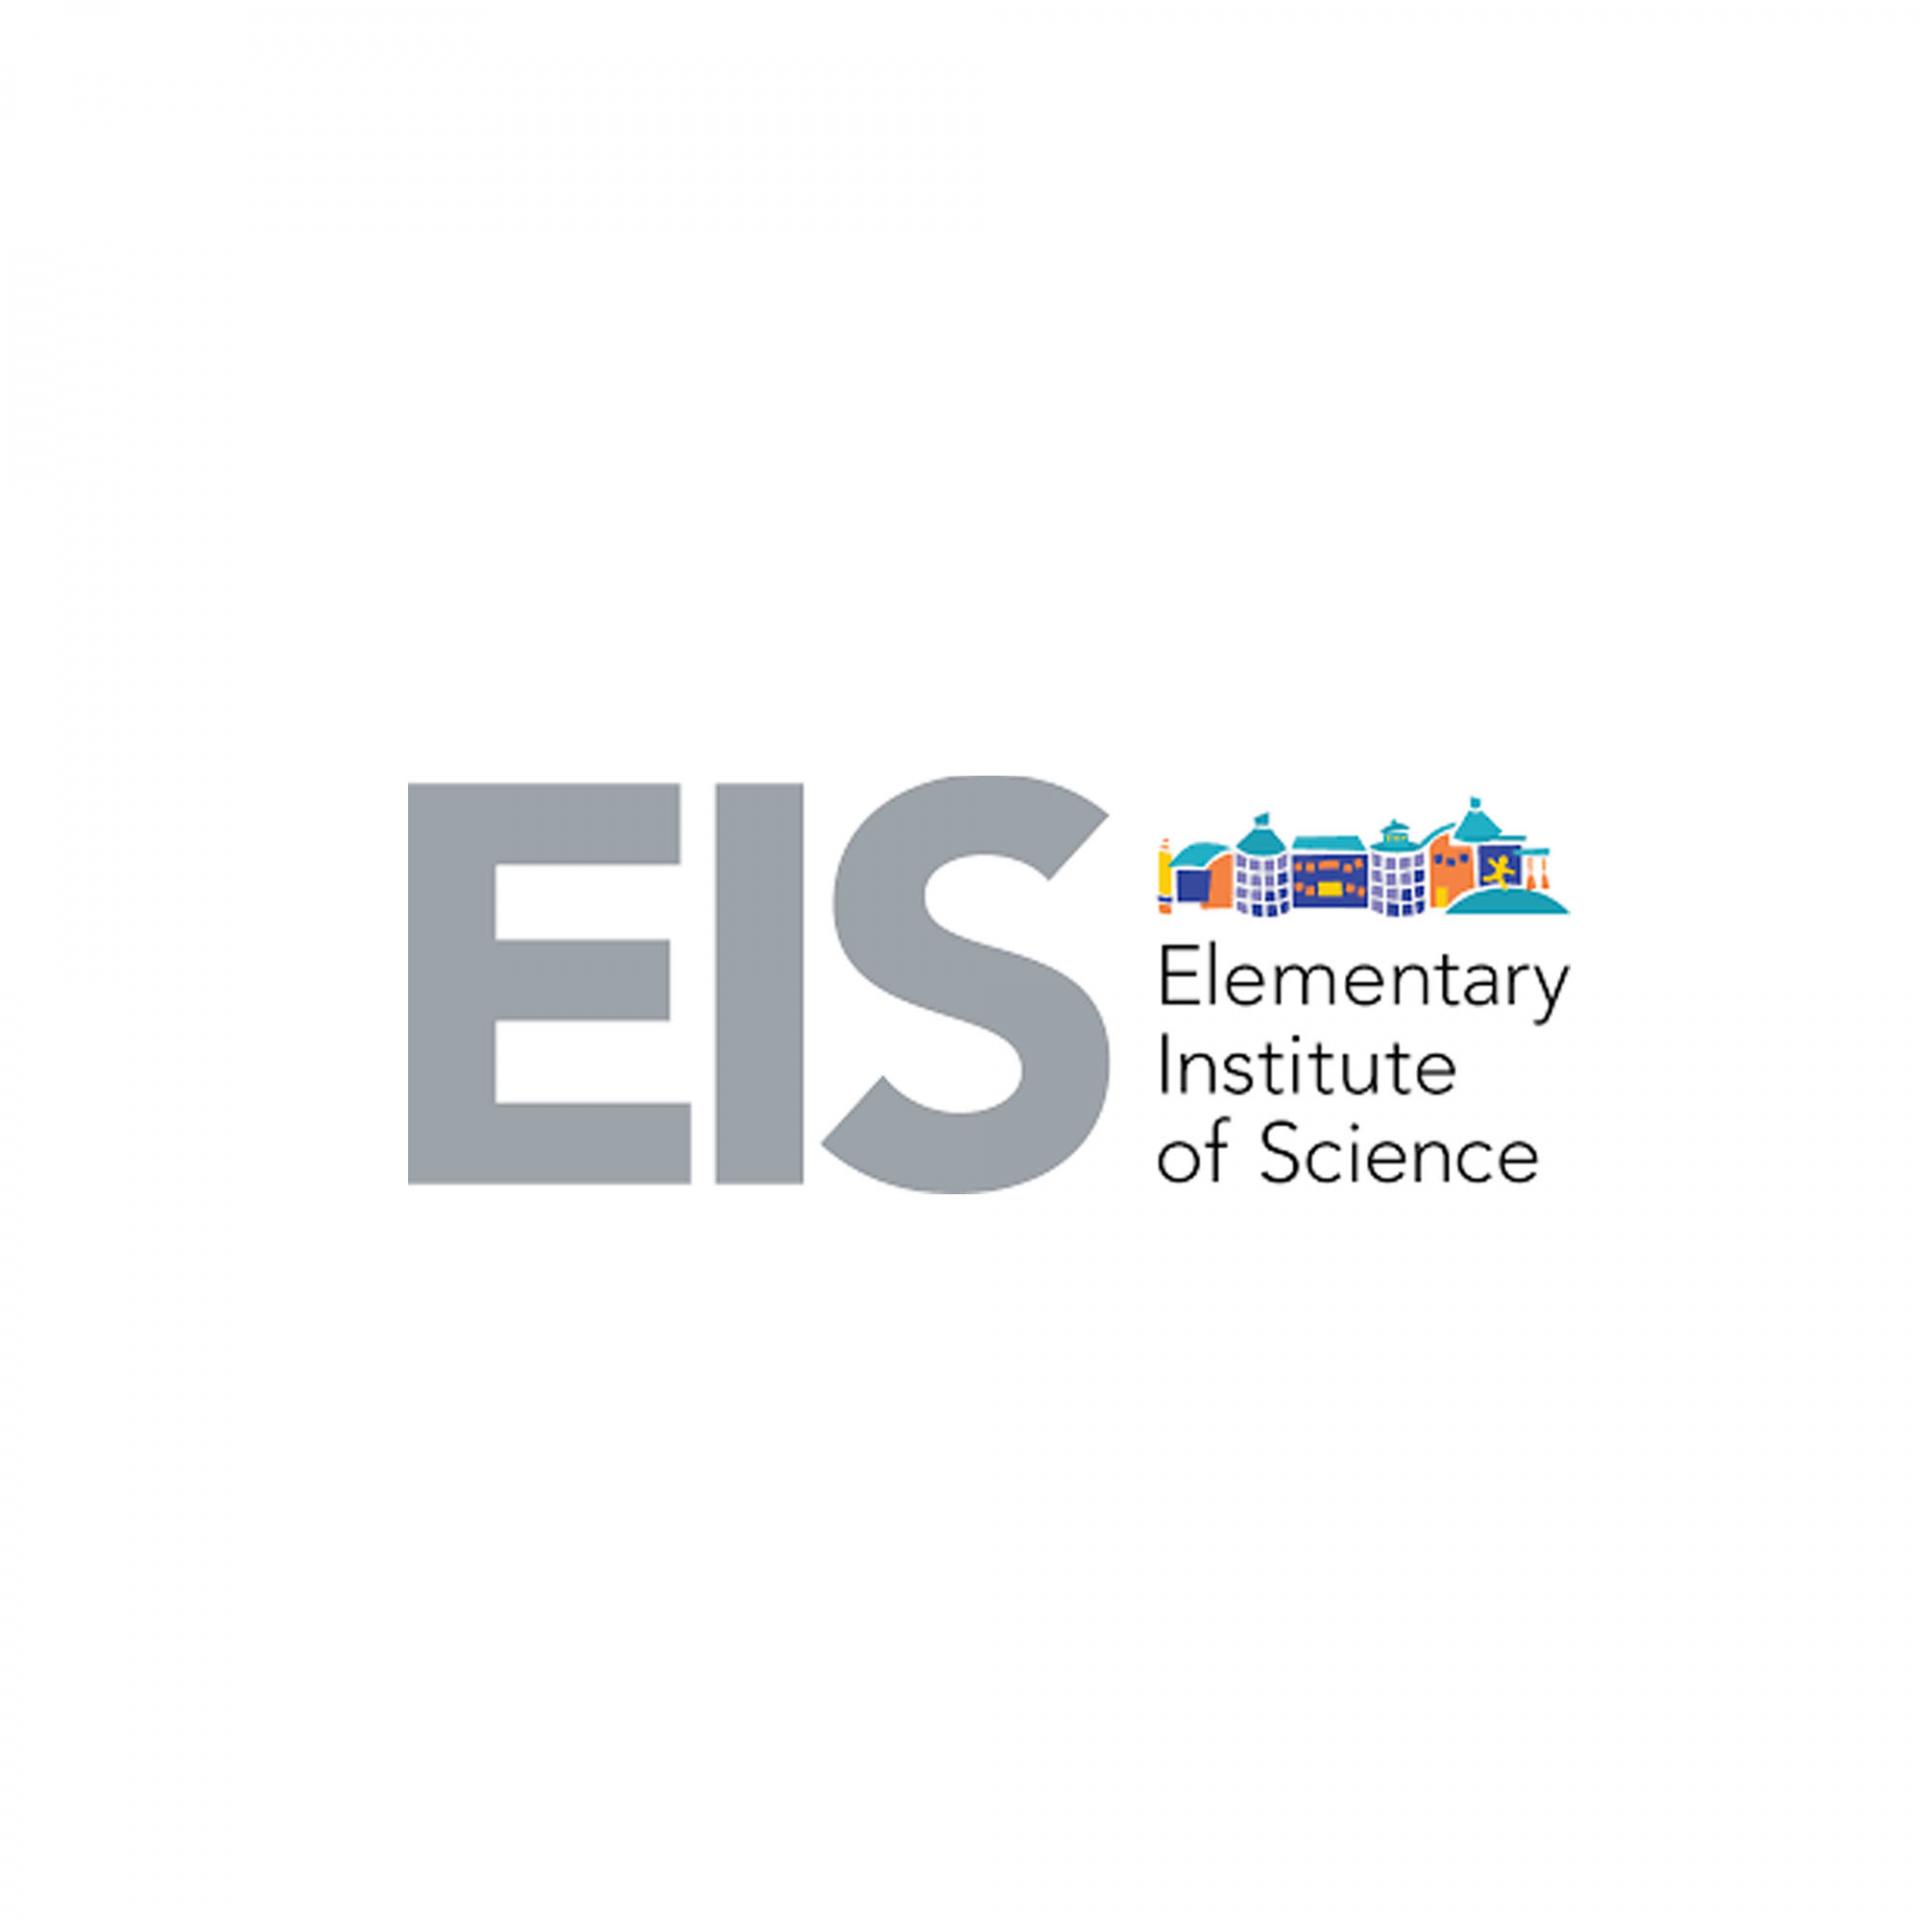 Elementary Institute of Science logo